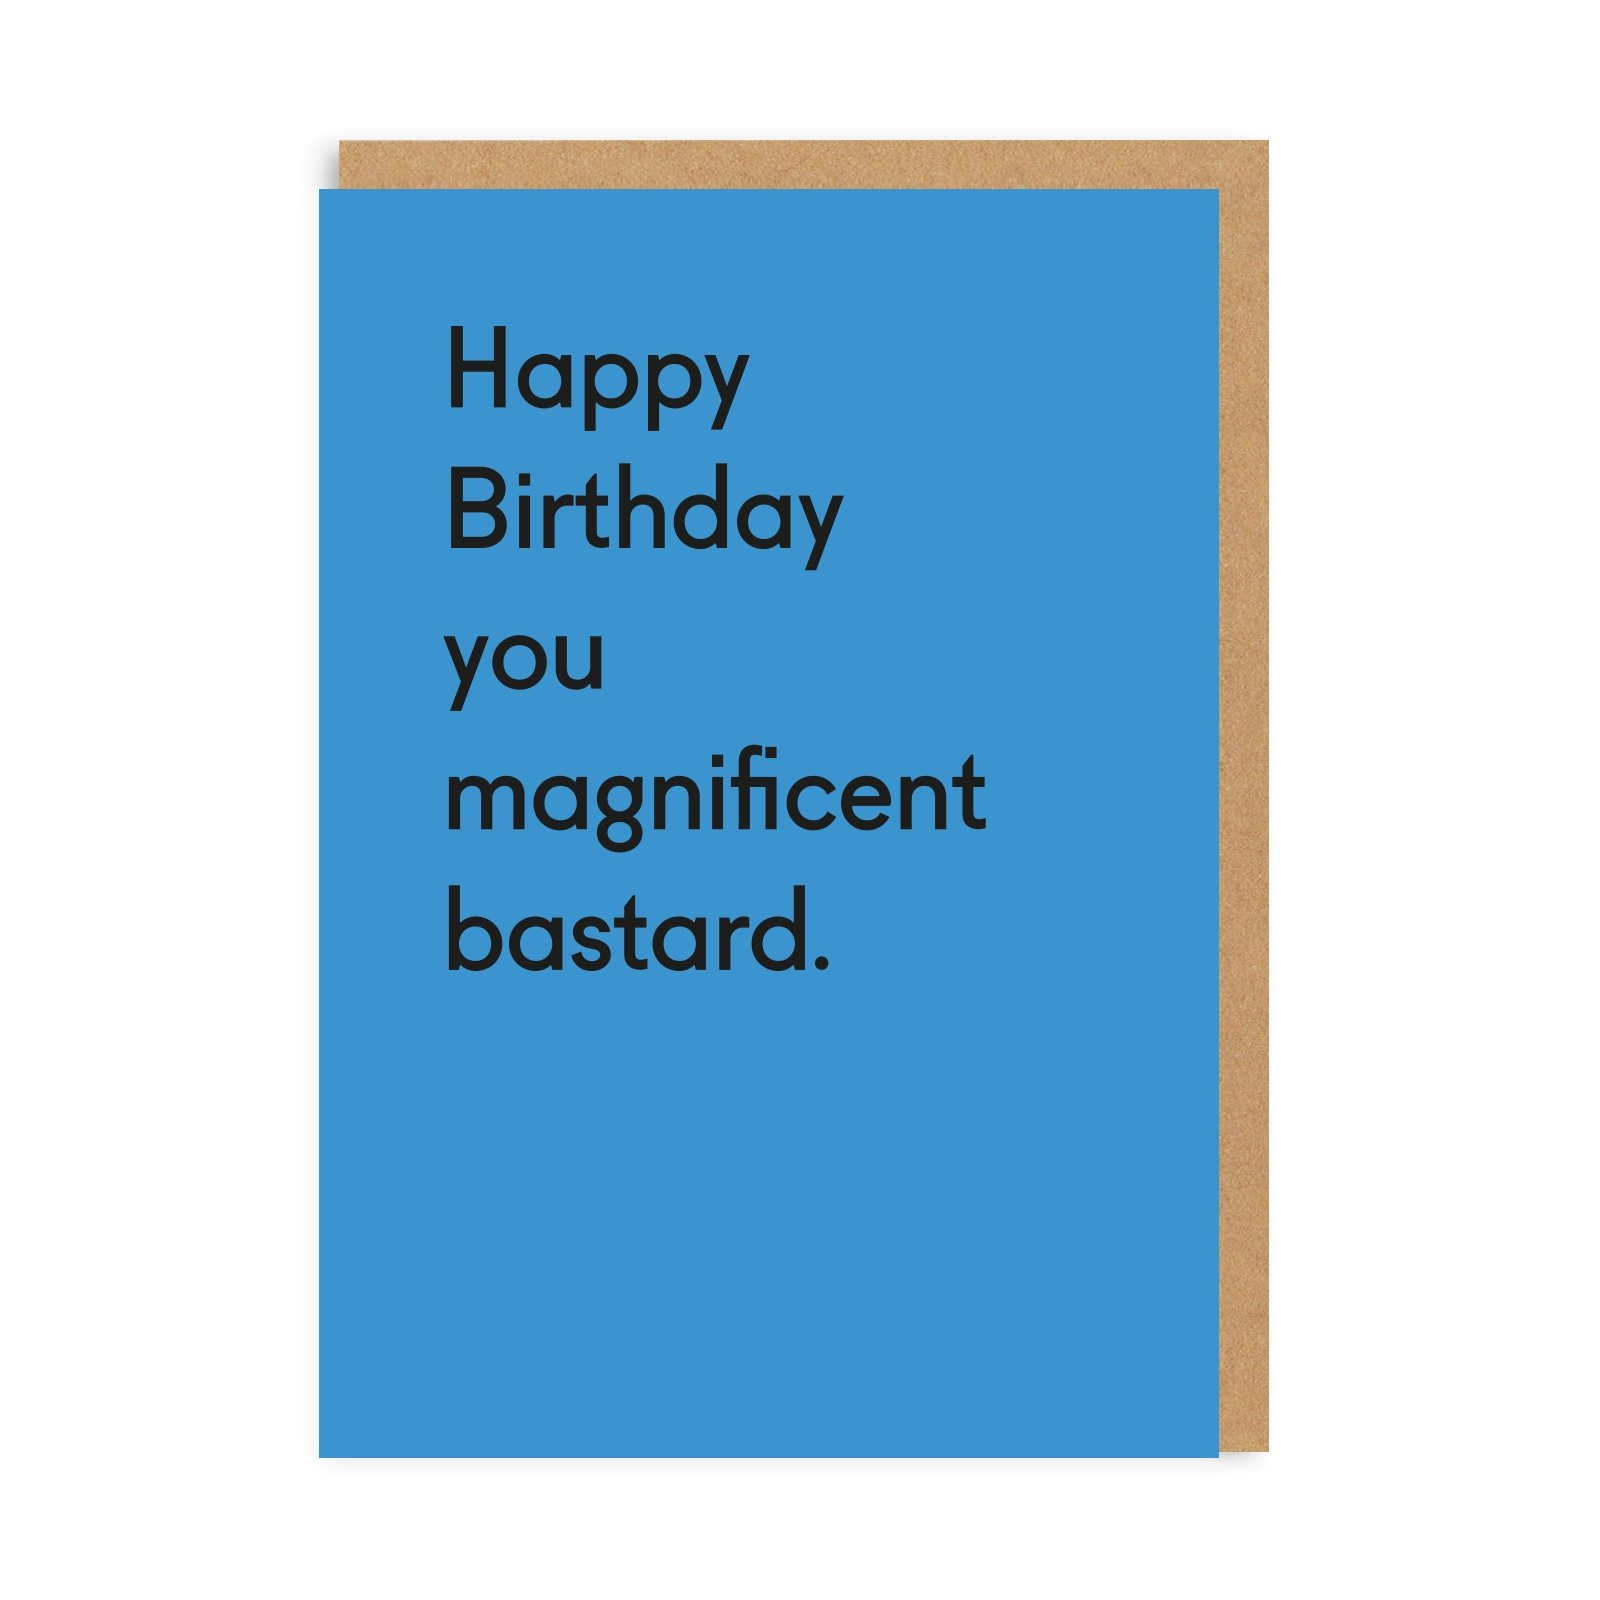 Happy Birthday You Magnificent Bastard Card Happy Birthday You Magnificent Bastard Greeting Card